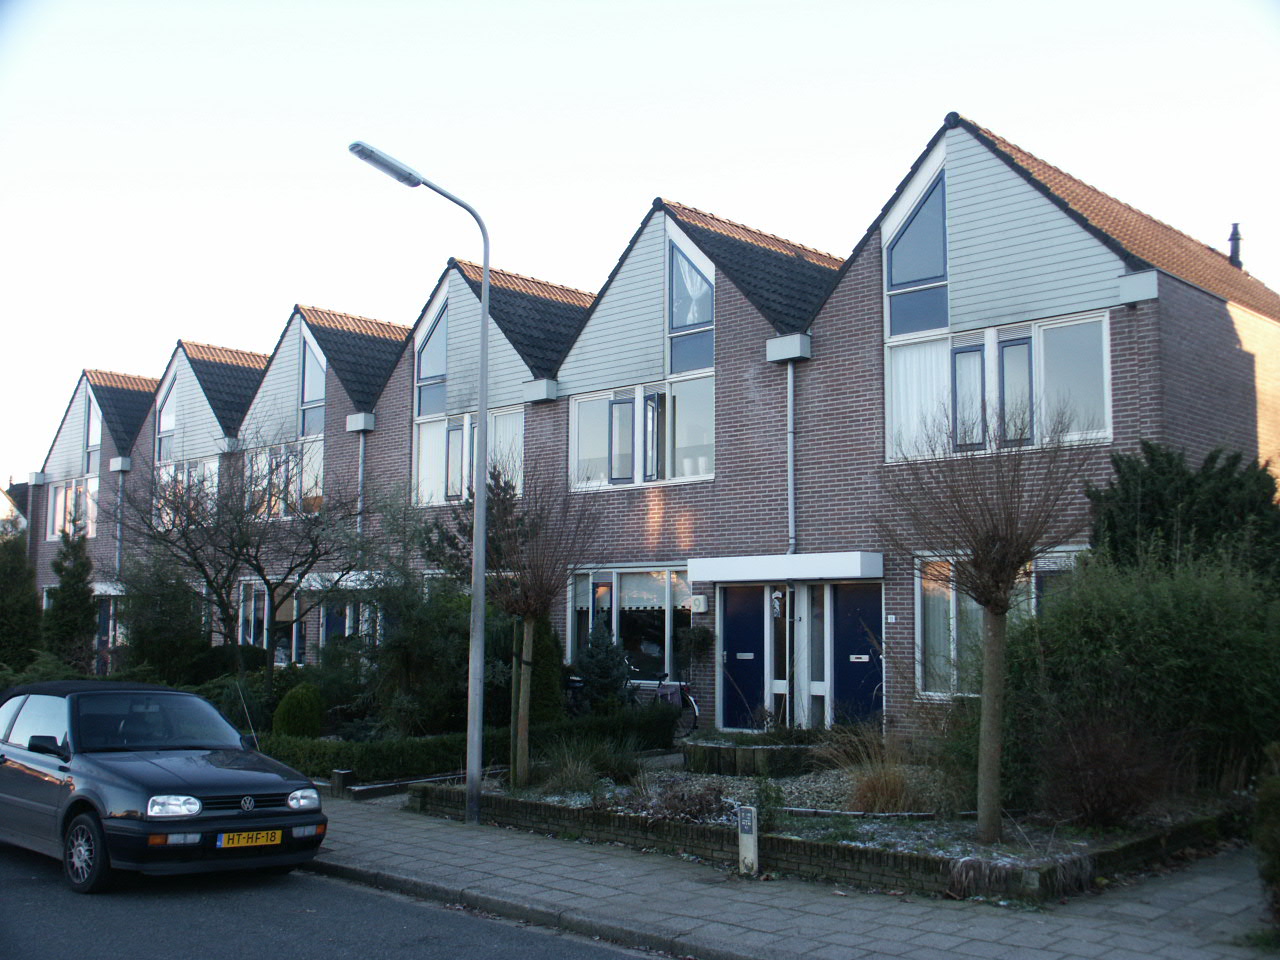 Kievitstraat 3, 7161 JA Neede, Nederland